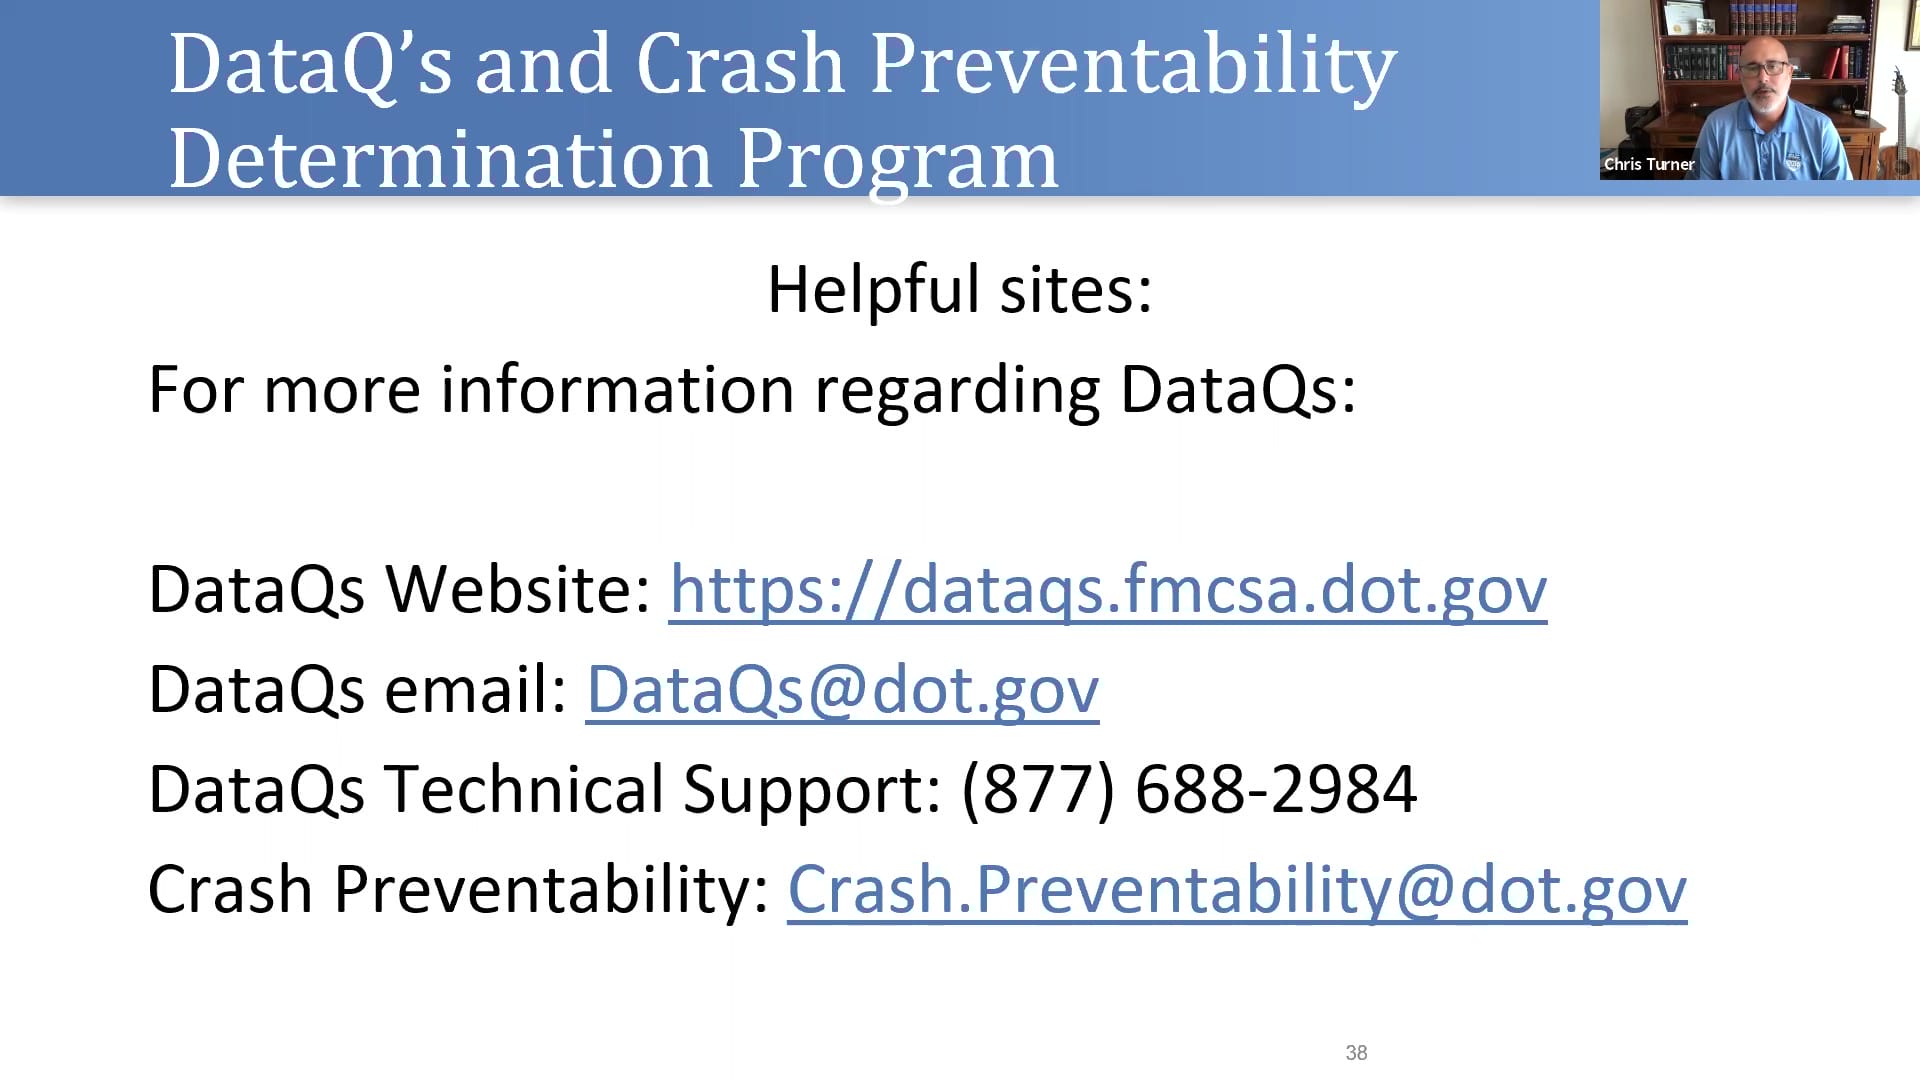 DataQ Crash Preventability Determination Program Helpful Sites